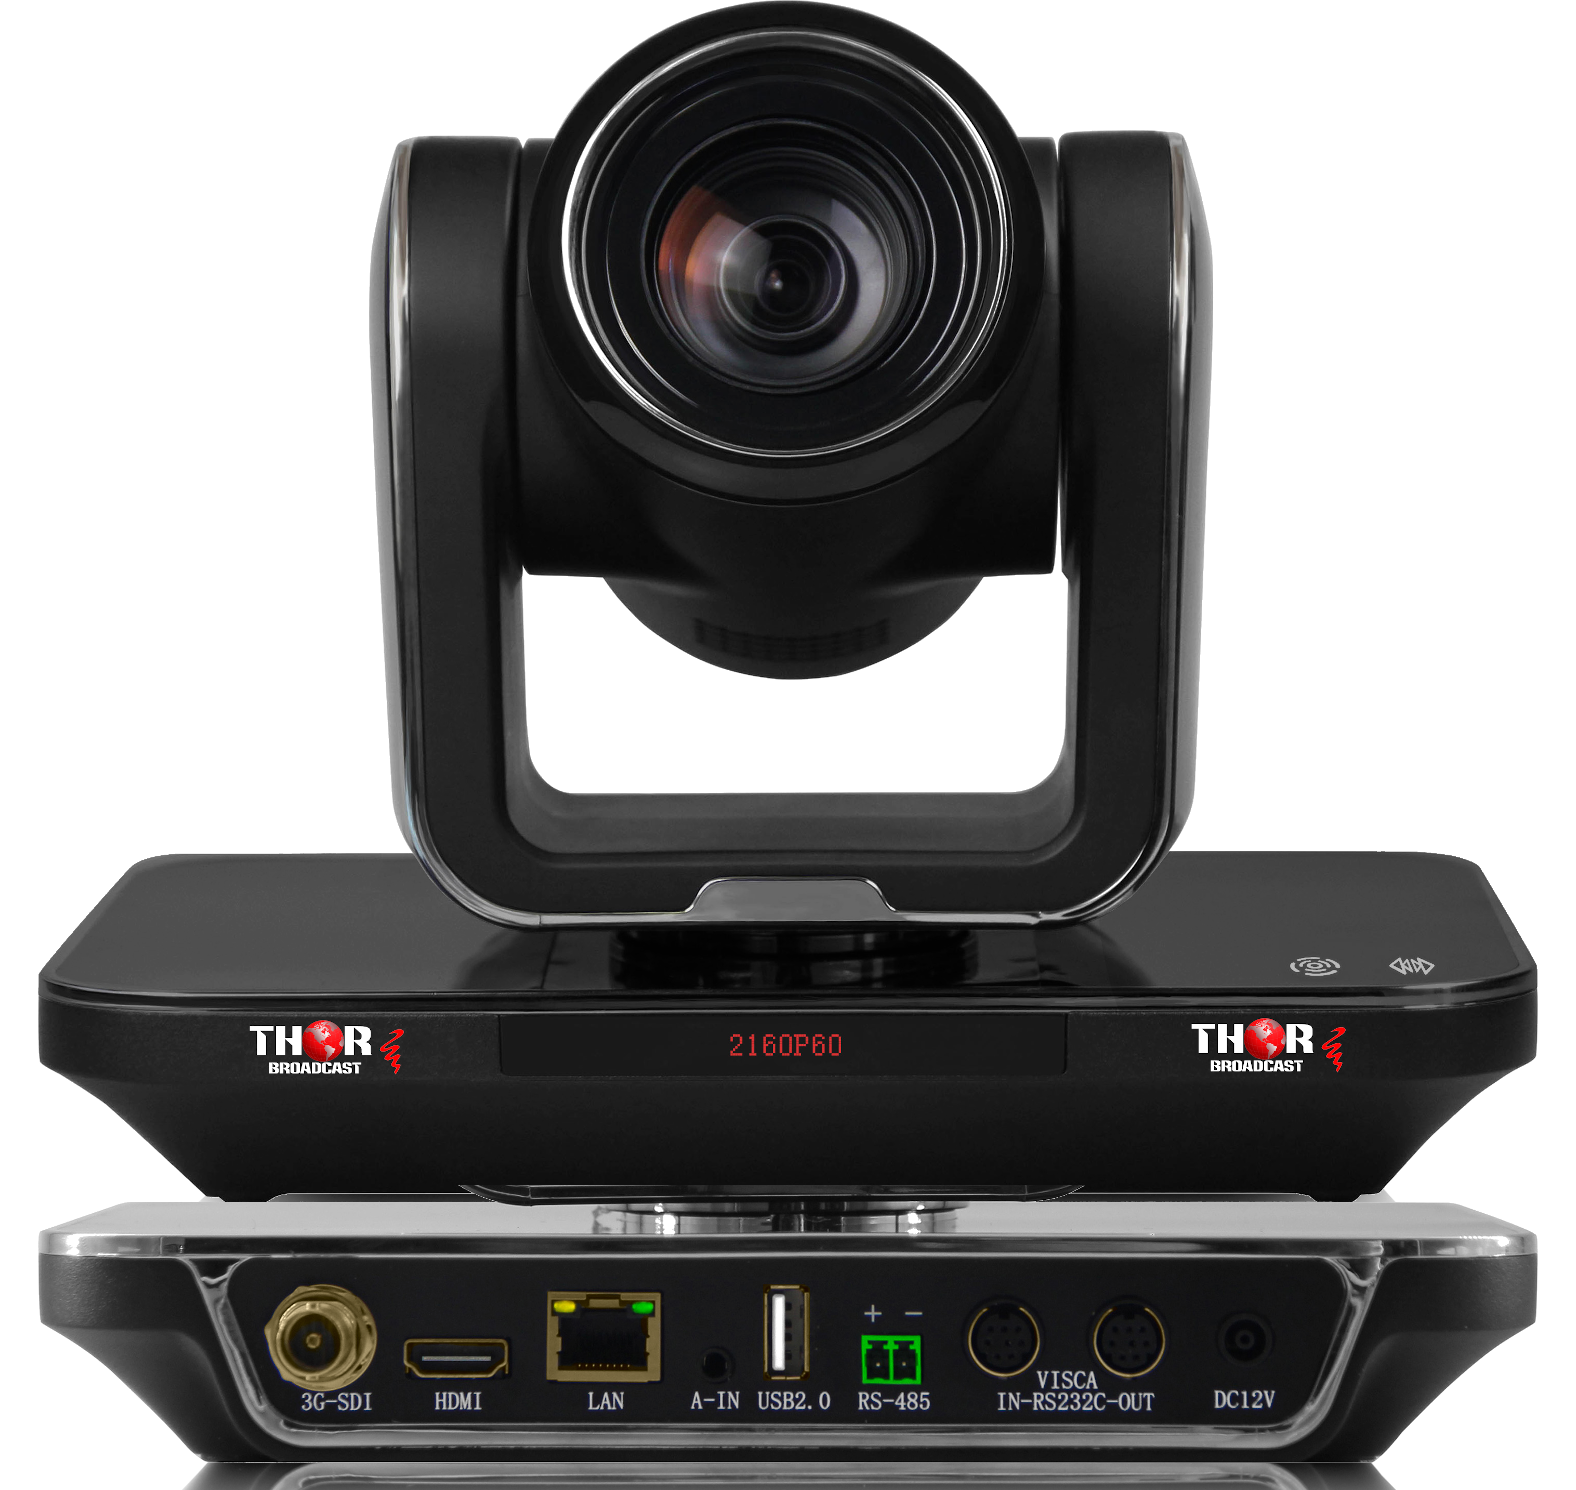 Caméra Webcam Live Stream Full HD 1080 P